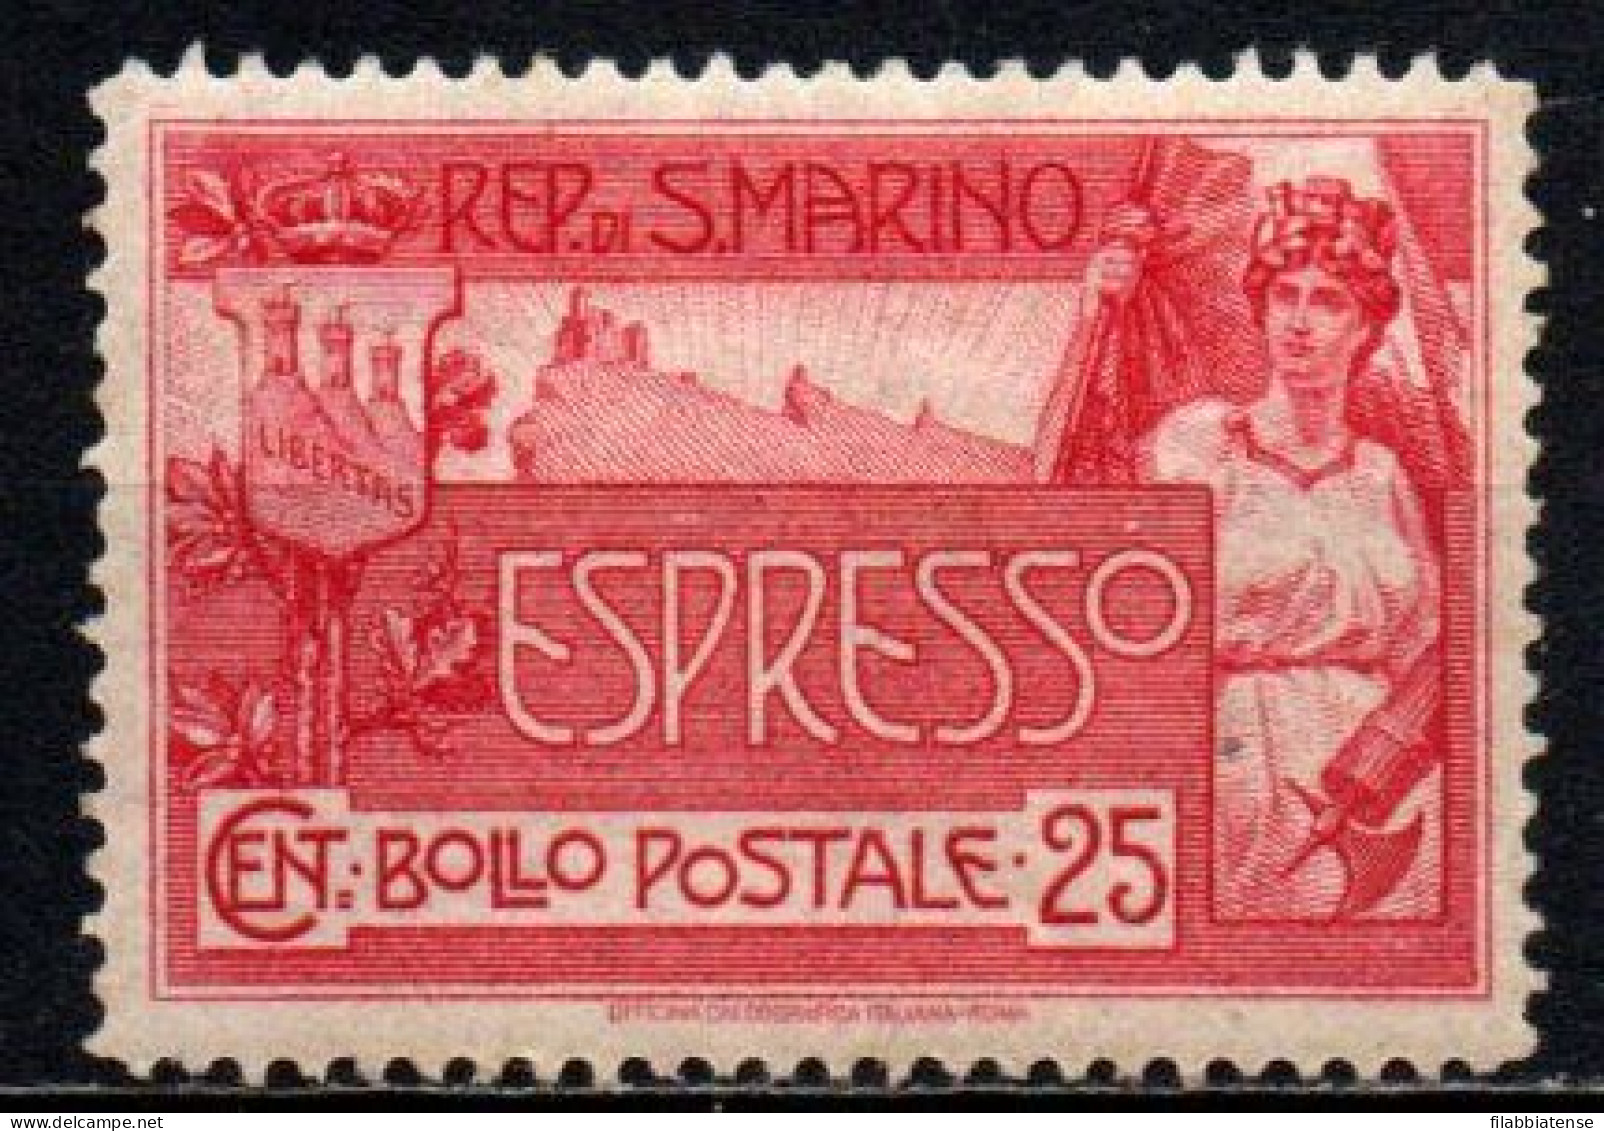 1907 - San Marino 1 Espresso  ++++++ - Unused Stamps